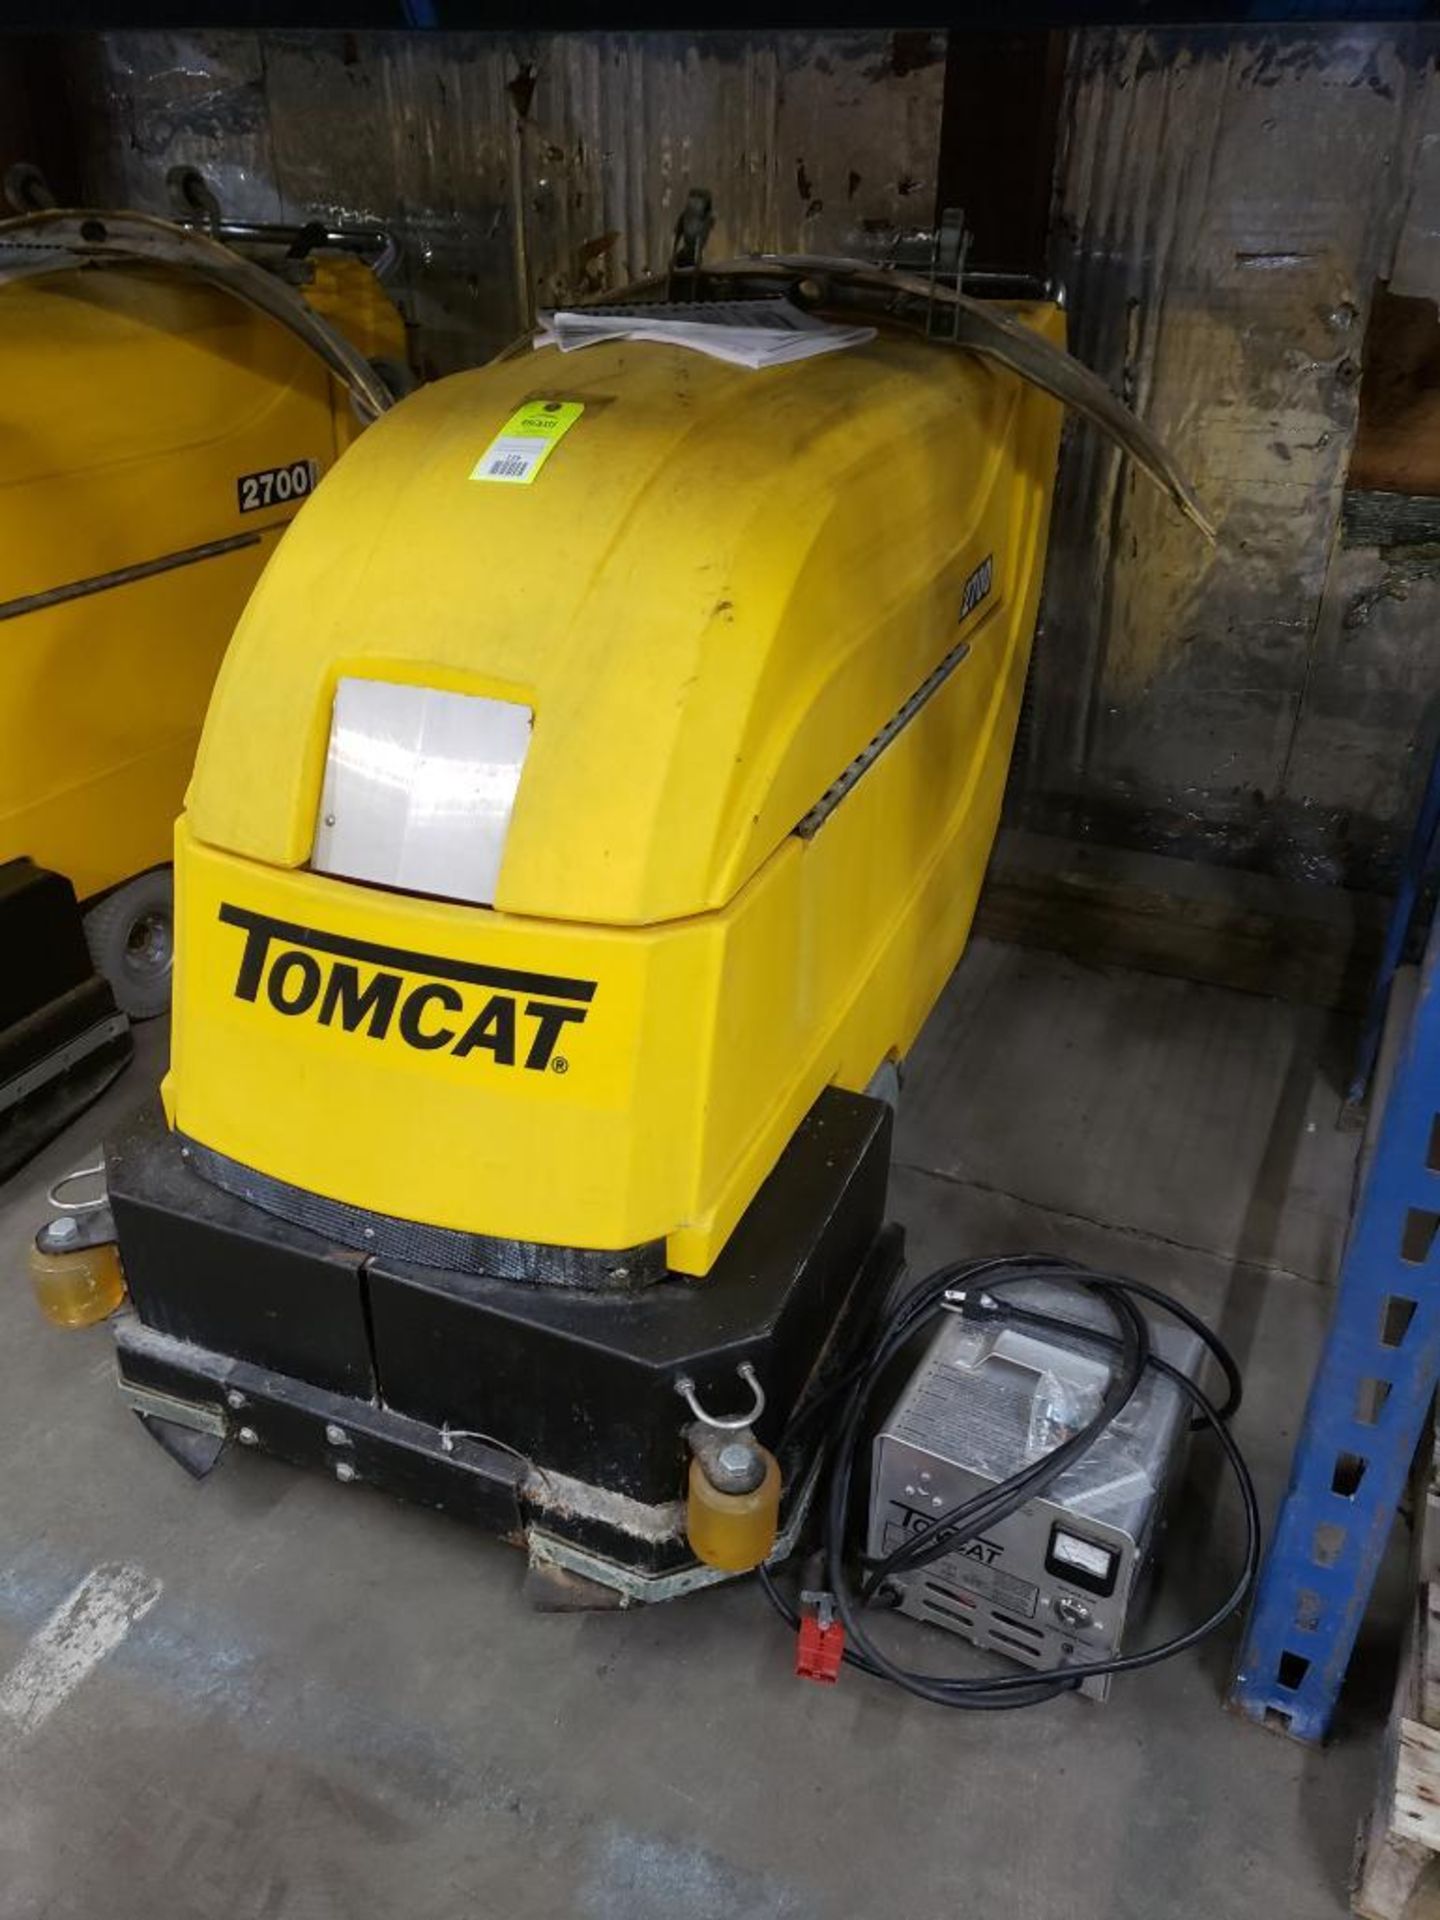 Tomcat 2700 industrial floor scrubber includes charger.